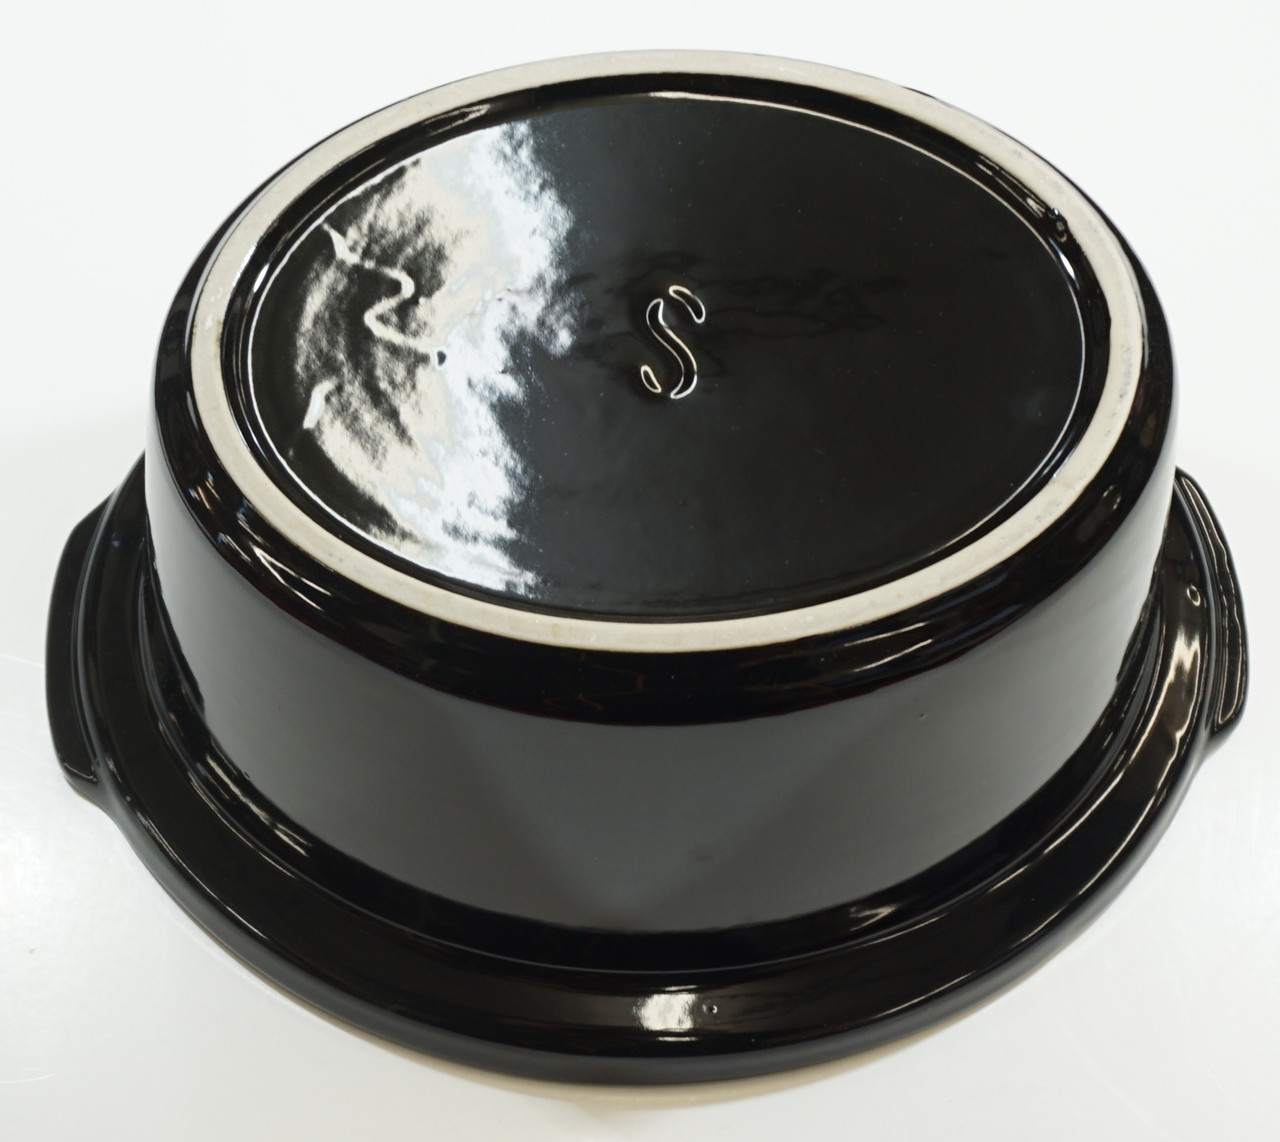 Best Buy: Crock-Pot 4-Quart Oval Slow Cooker Stainless-Steel SCCPVL400-S